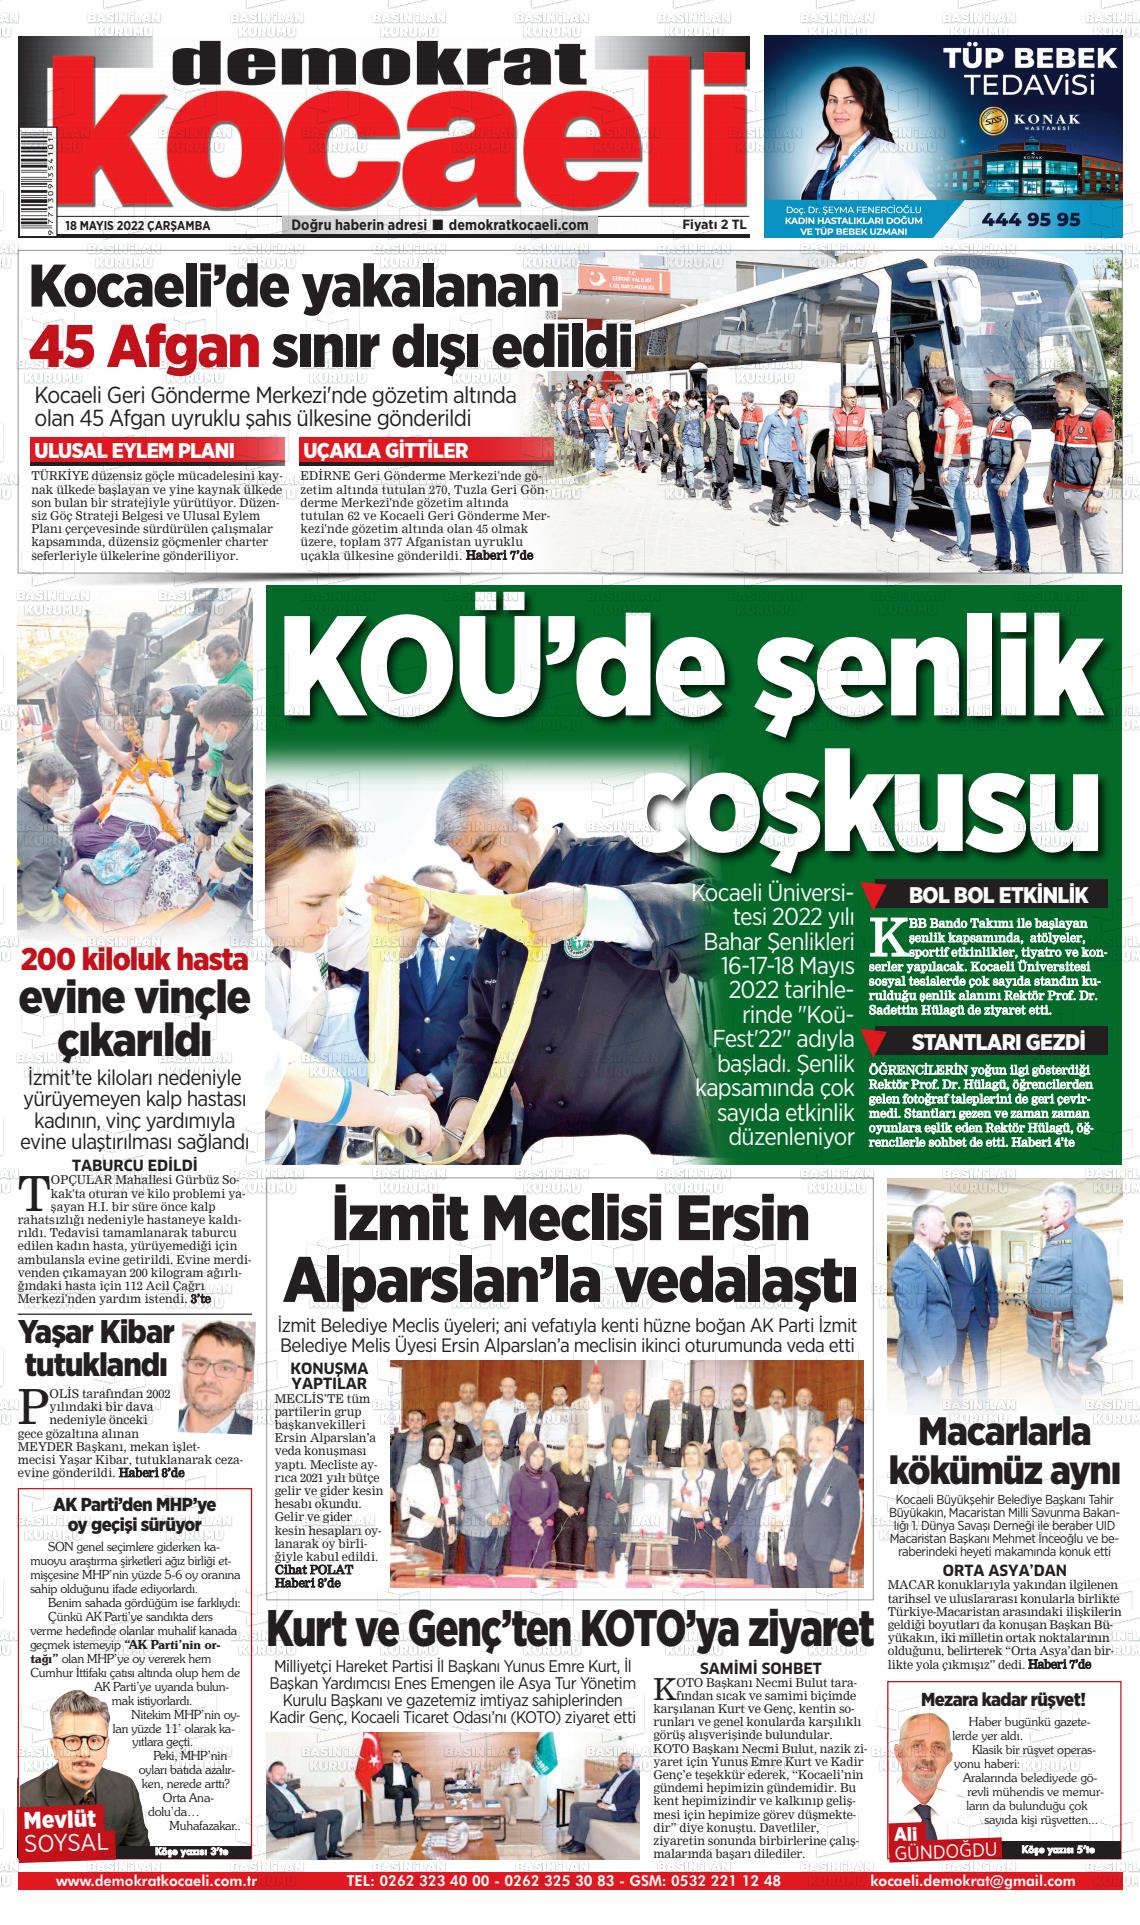 18 Mayıs 2022 Demokrat Kocaeli Gazete Manşeti